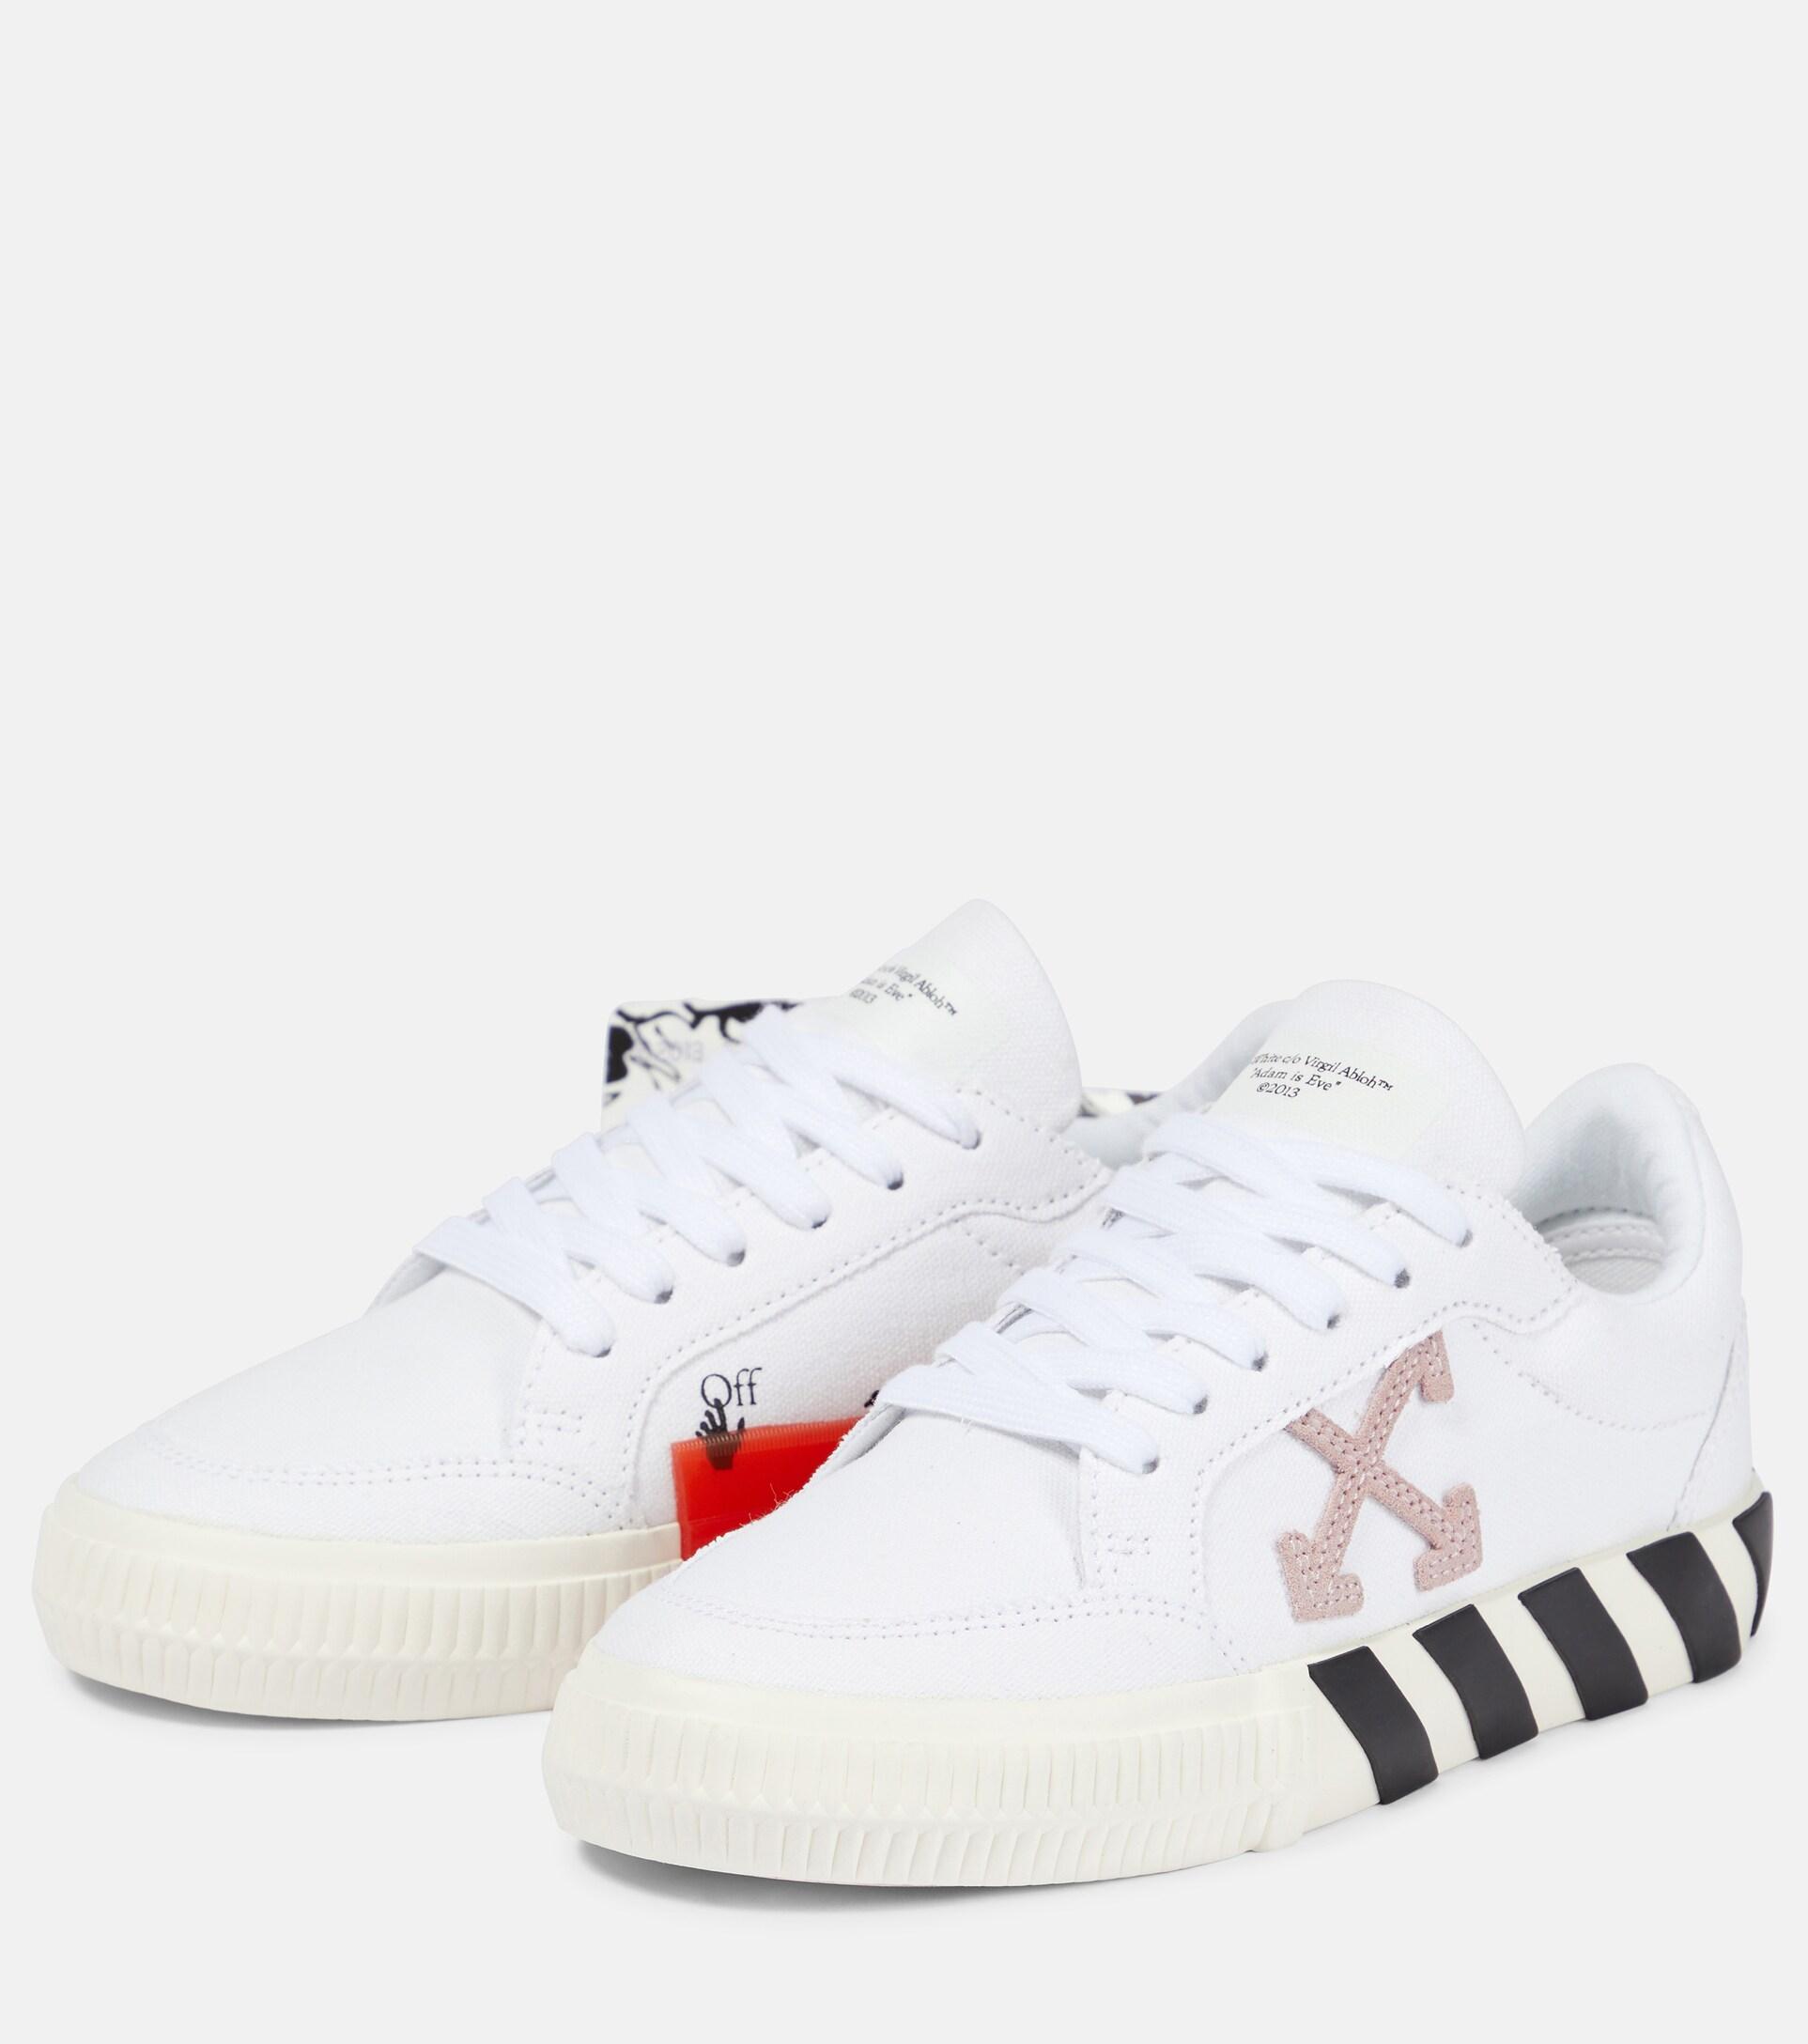 Off-White c/o Virgil Abloh Vulcanized Sneakers in White | Lyst